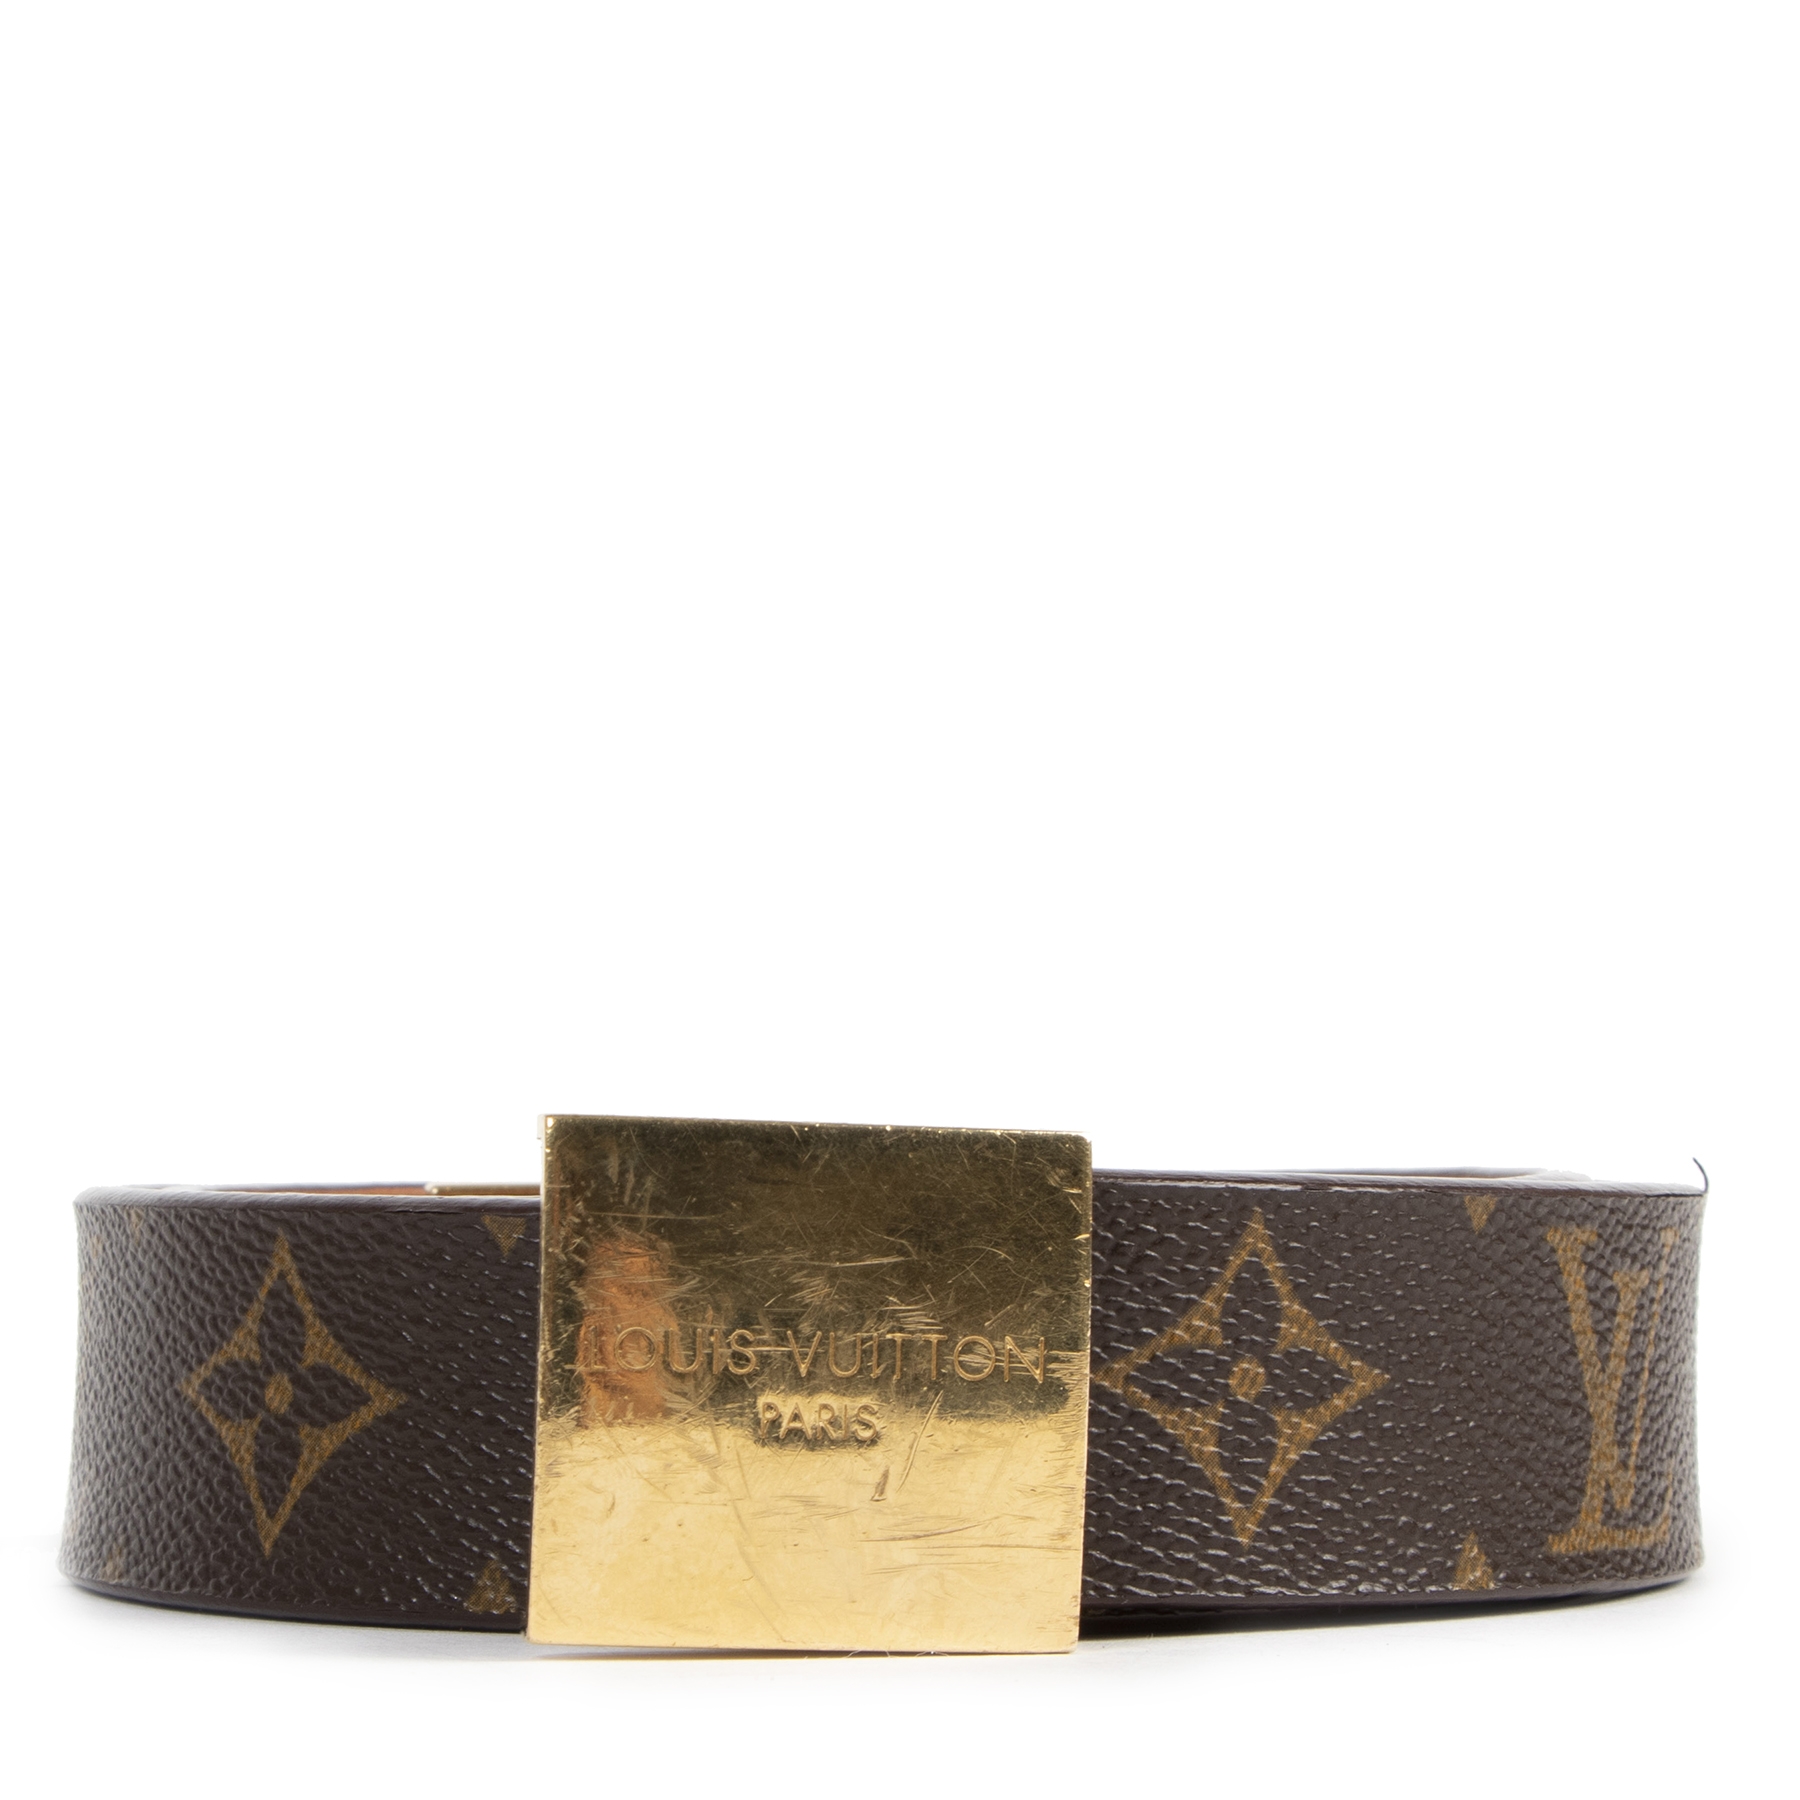 We love Louis Vuitton Monogram belts when they cost only 150€ ✨ # louisvuitton #louisvuittonbags #viaanabel